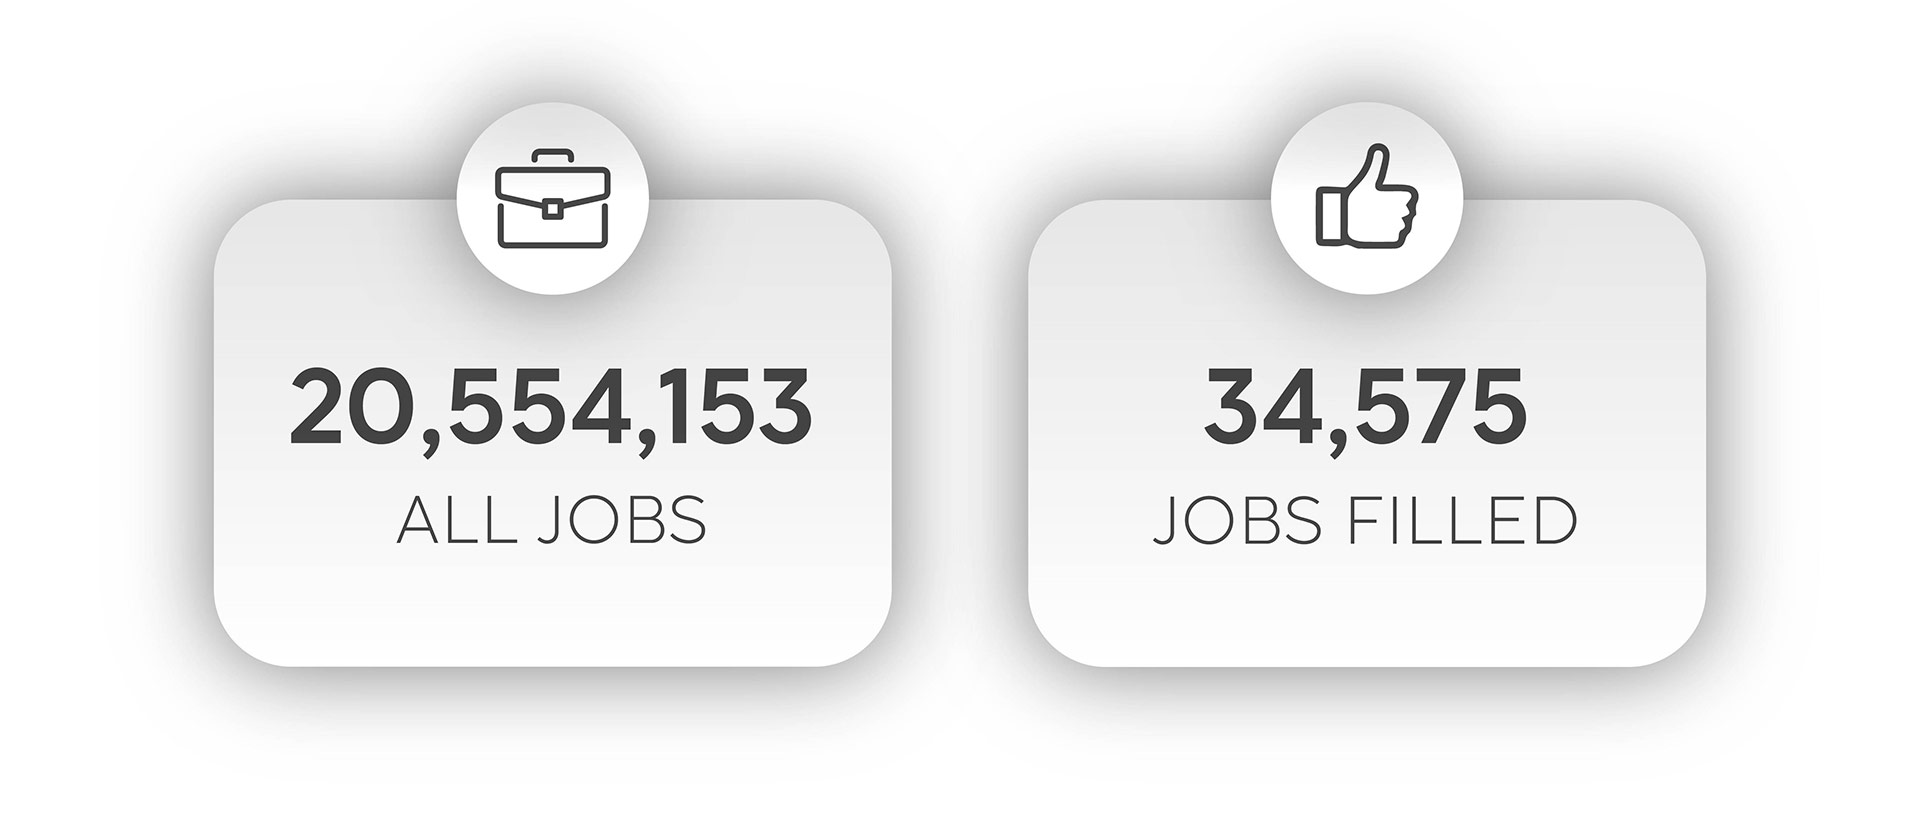 all jobs - jobs filled